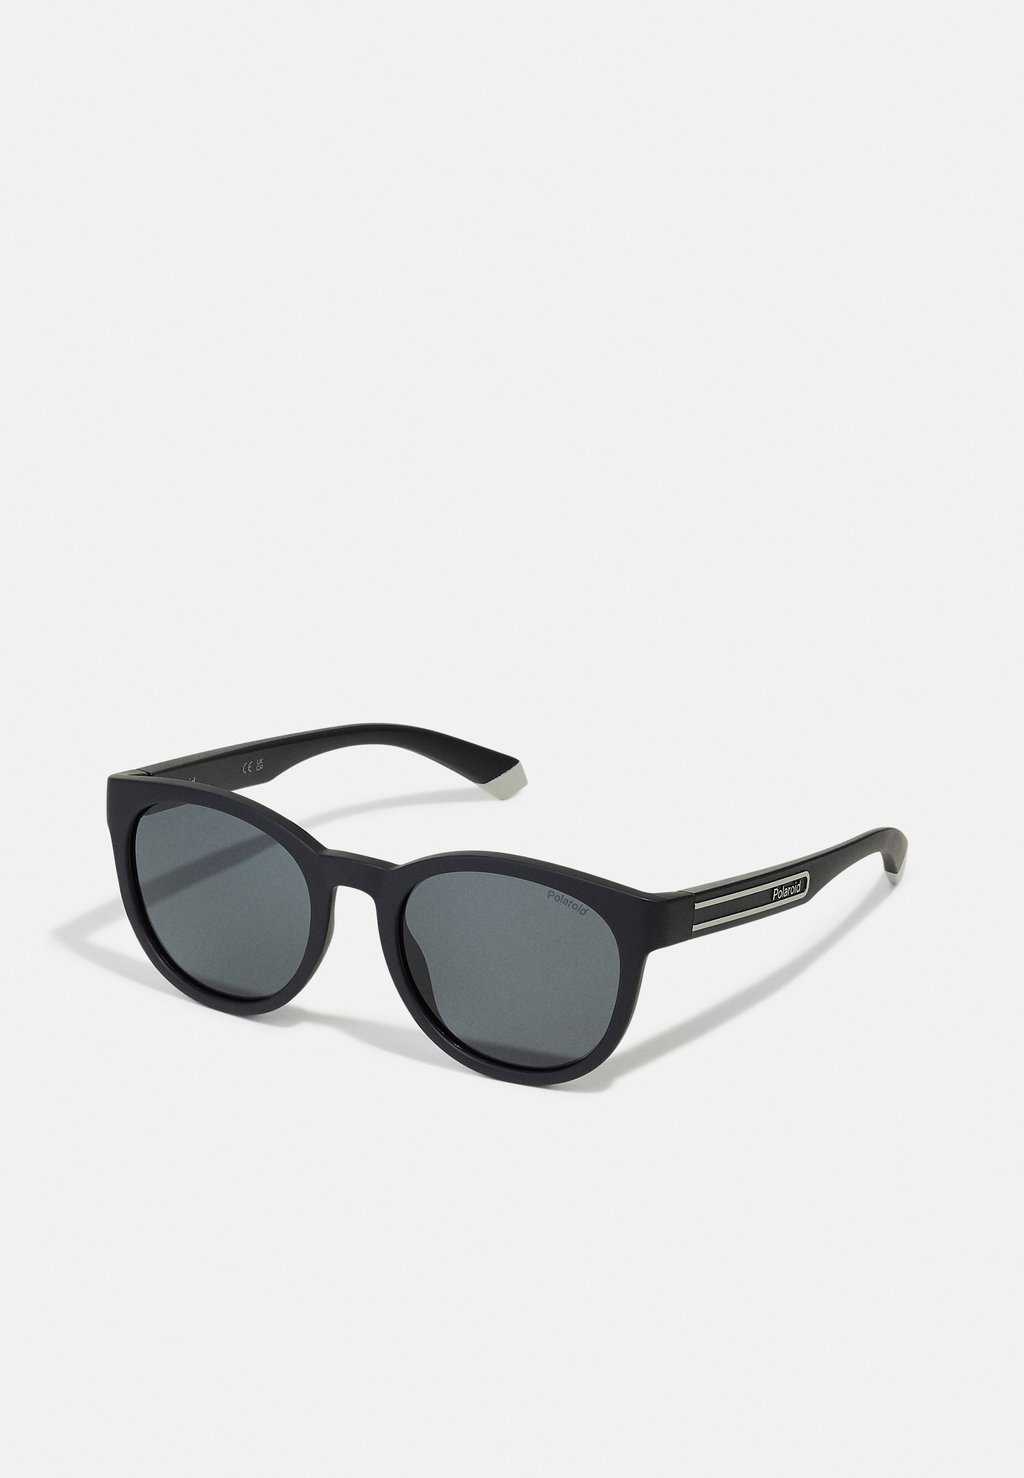 Солнцезащитные очки UNISEX Polaroid, цвет black grey